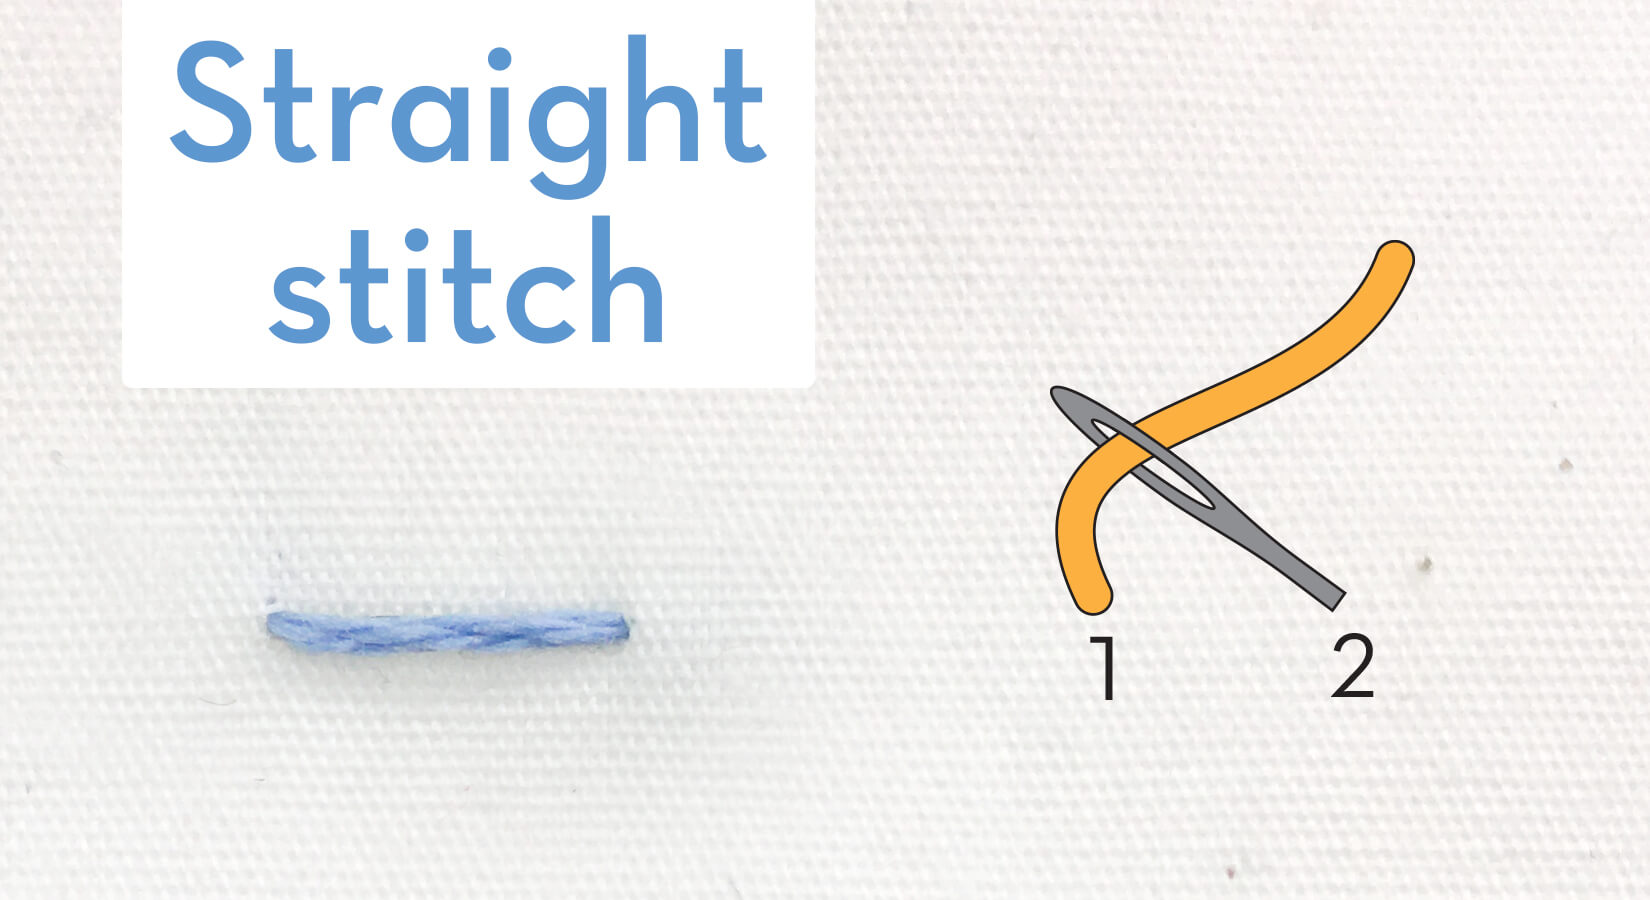 straight stitch - embroidery stitches